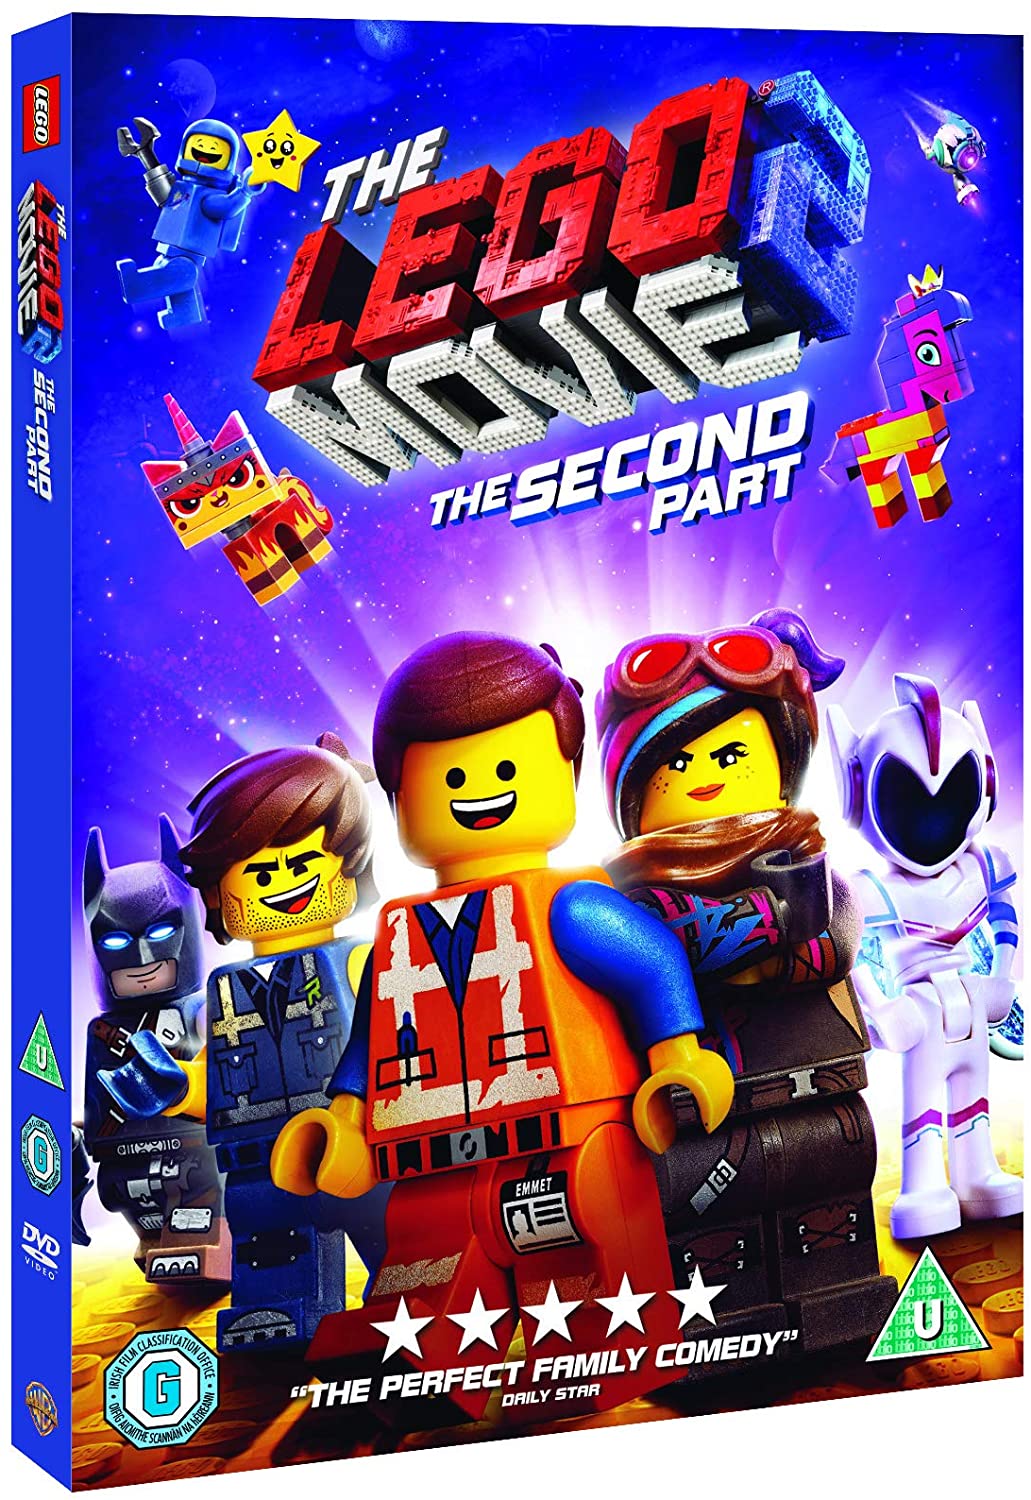 The LEGO Movie 2 [2019] - Family/Comedy [DVD]